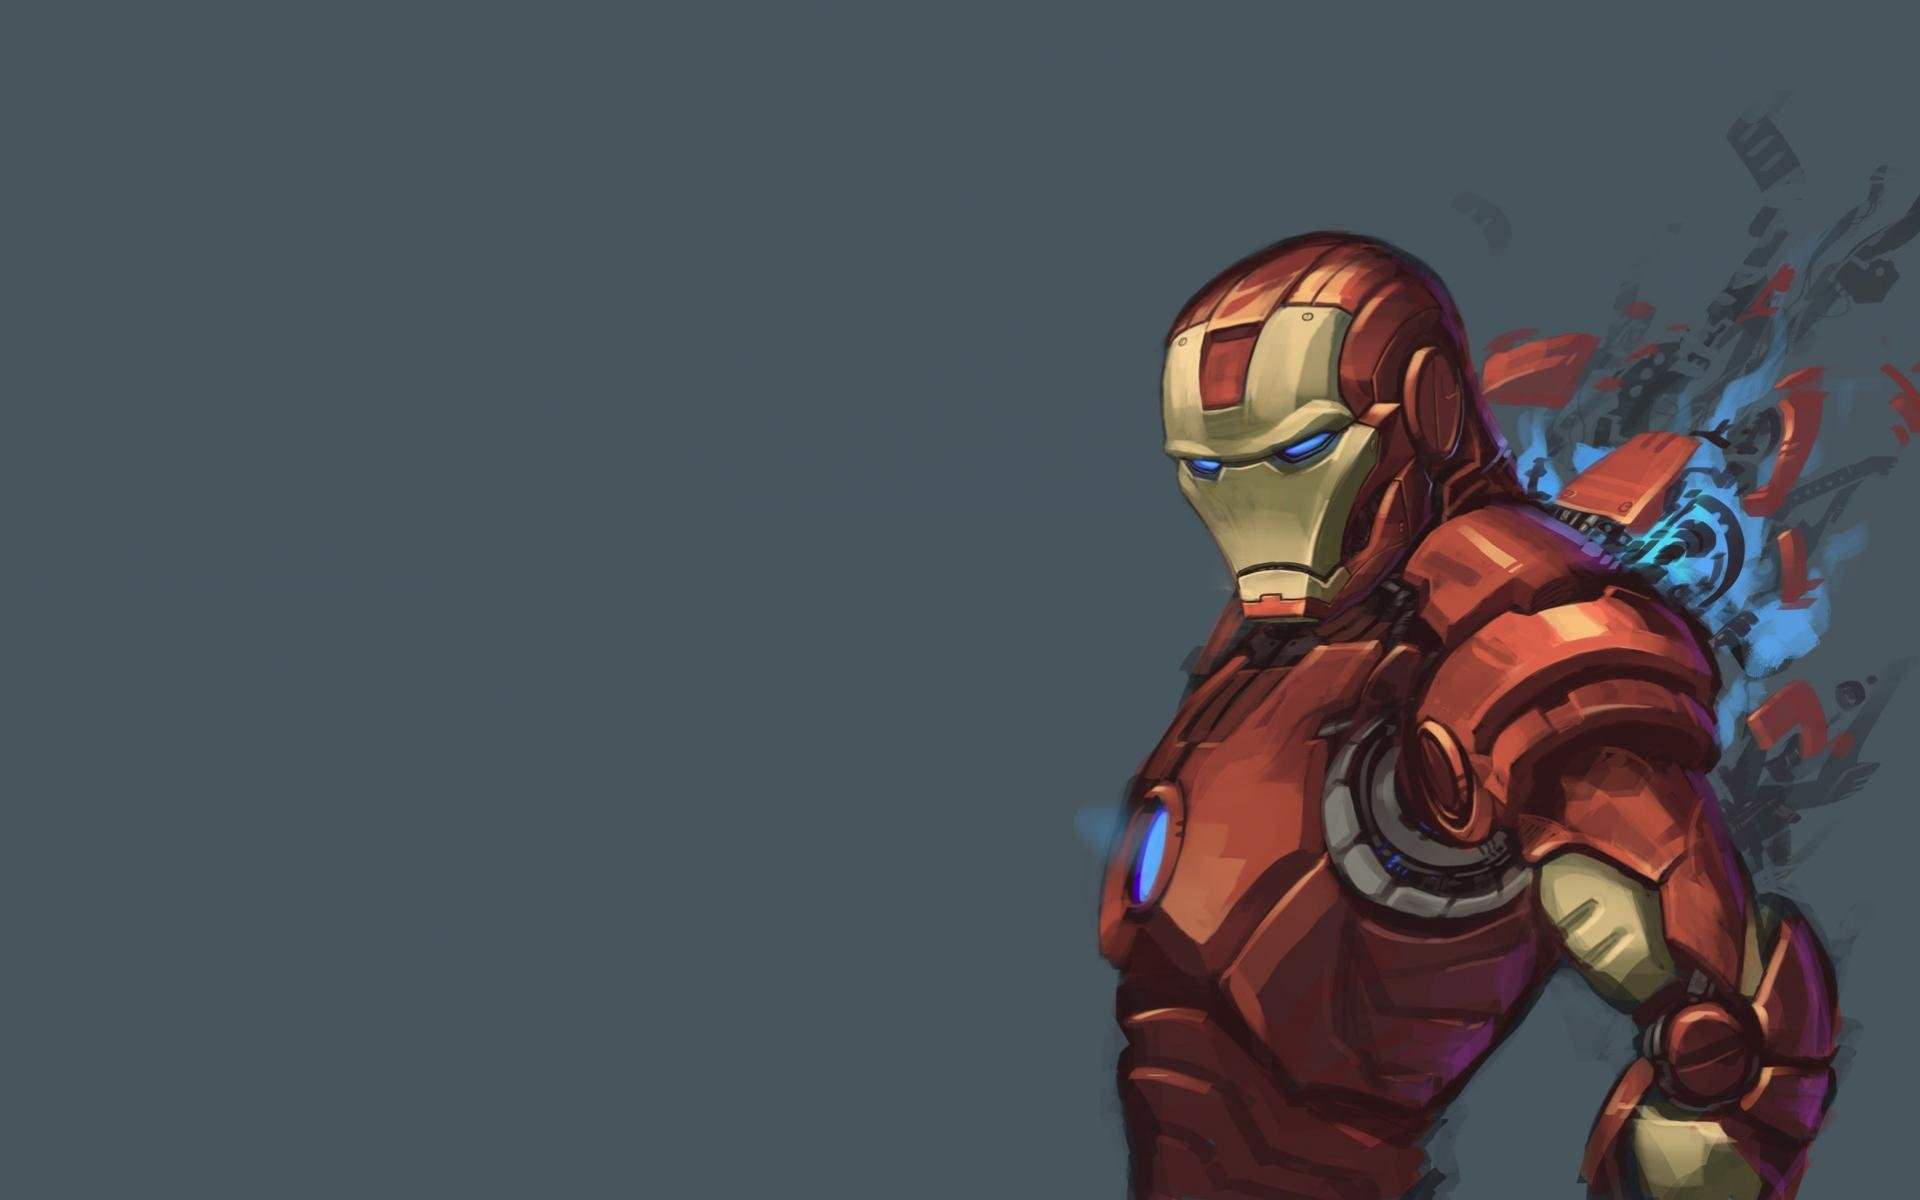 Tony Stark wallpaper HD for desktop background